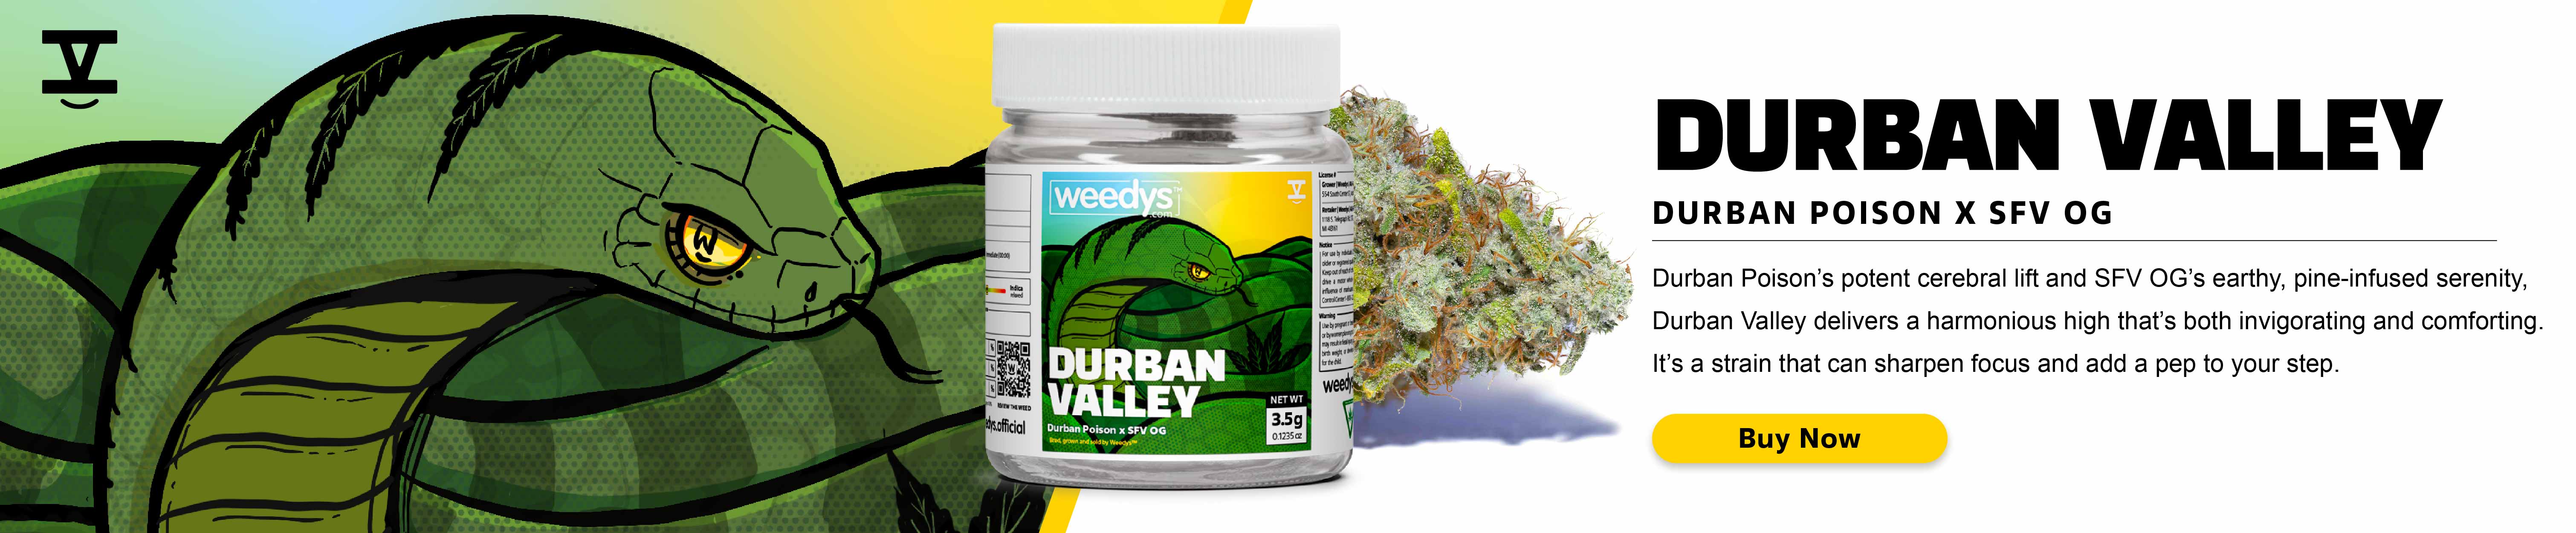 Weedys Durban Valley Desktop Banner